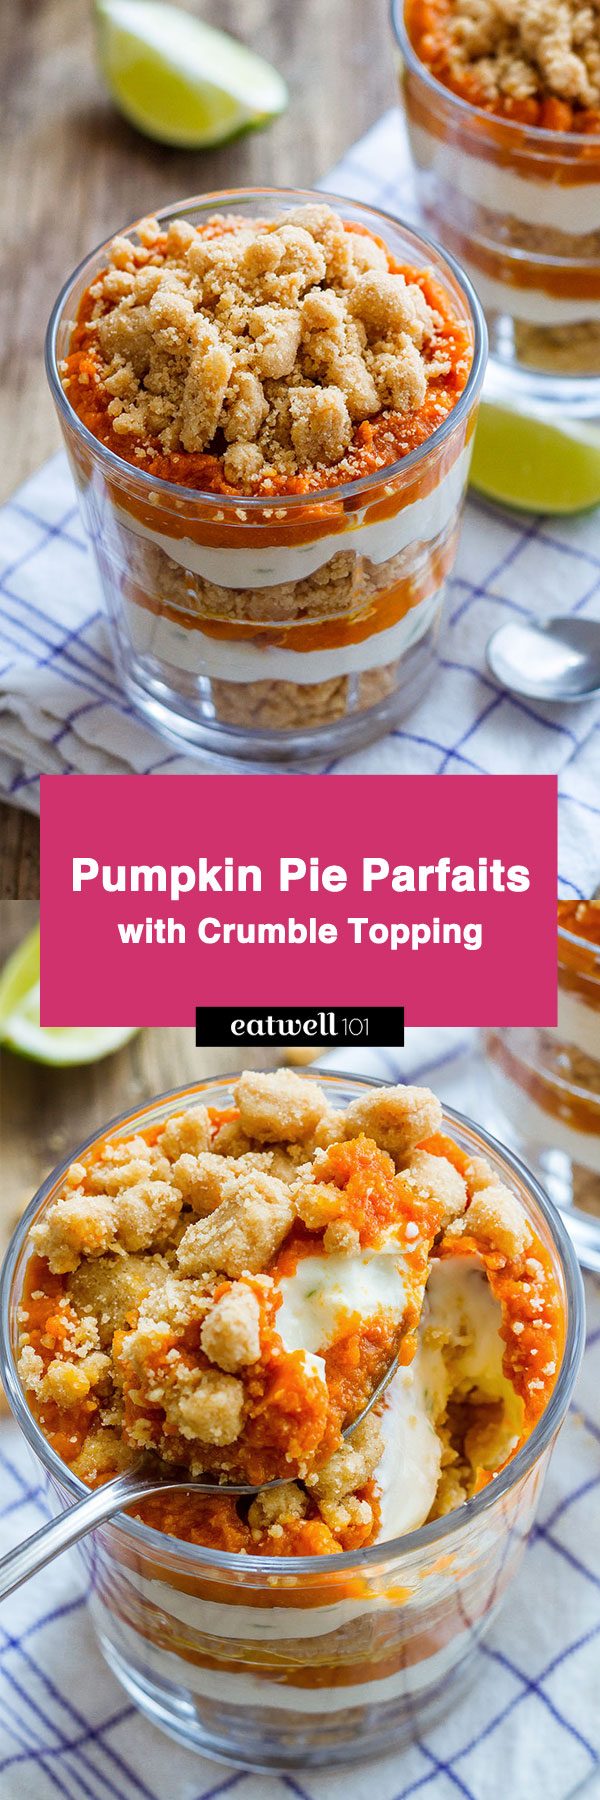 Pumpkin Pie Parfaits with Crumble Topping — A super easy Fall dessert that tastes just like pumpkin pie.